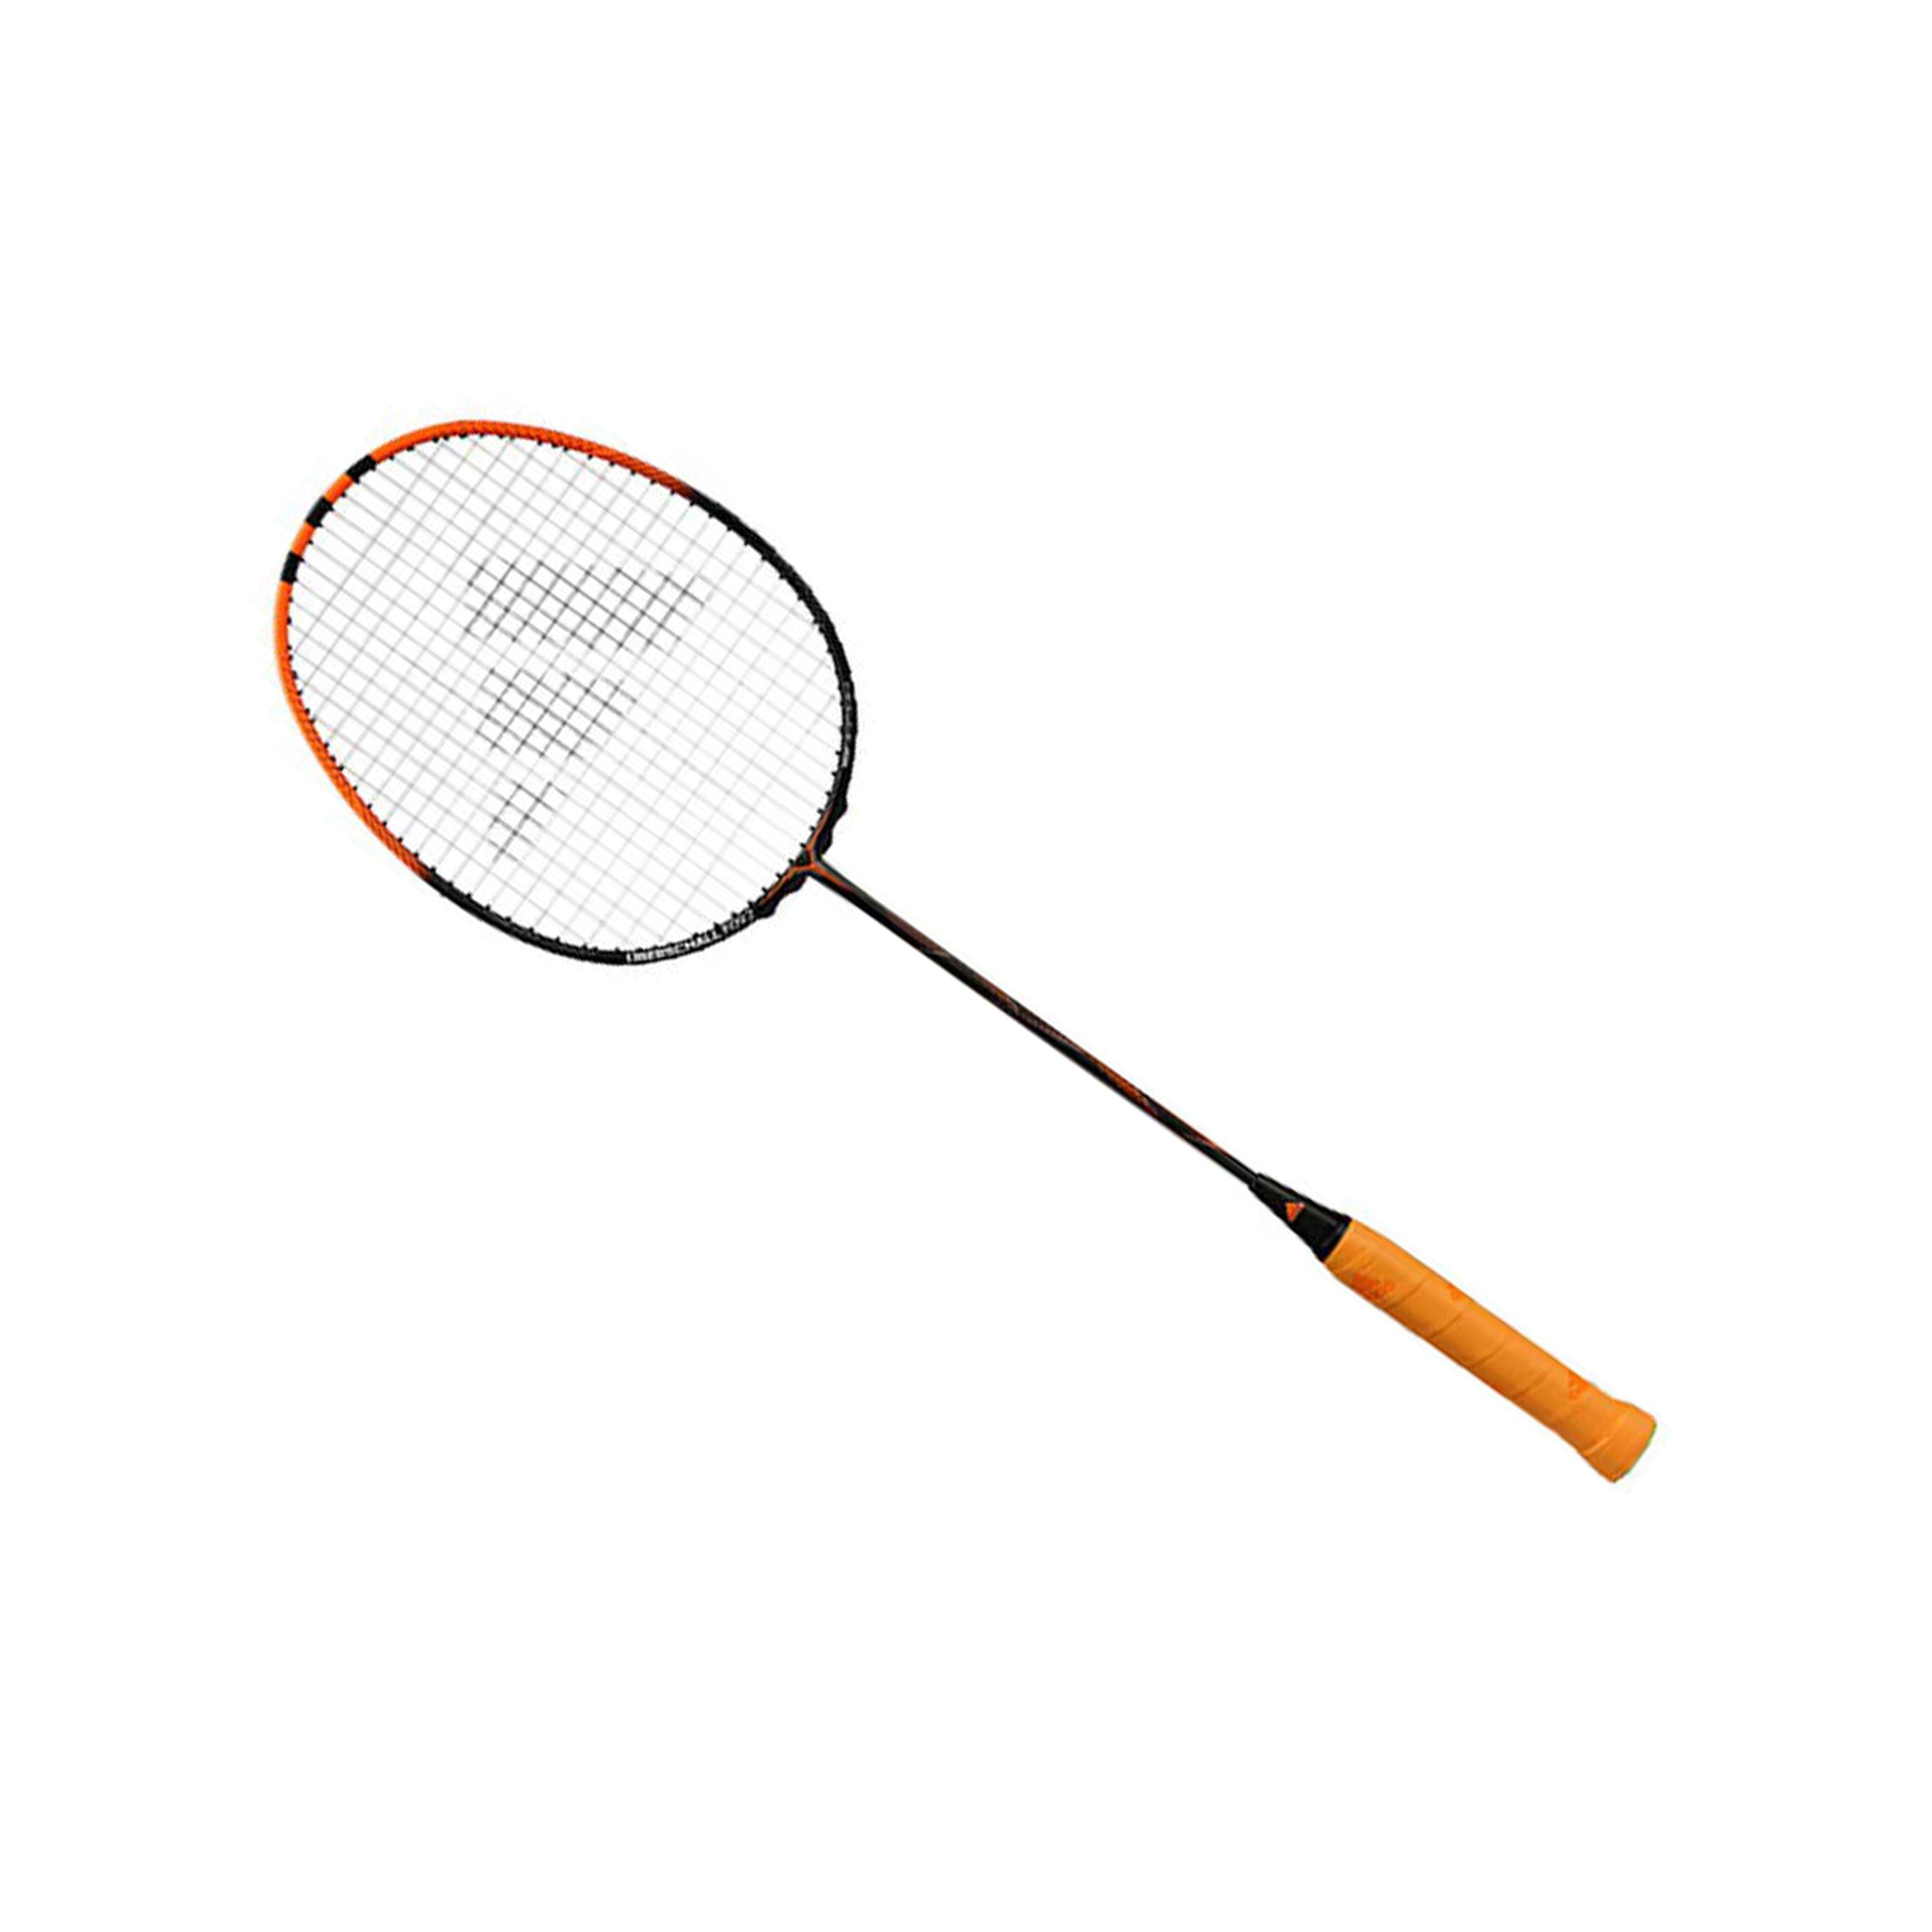 Ubershall F09.2 UnStrung Badminton Racket